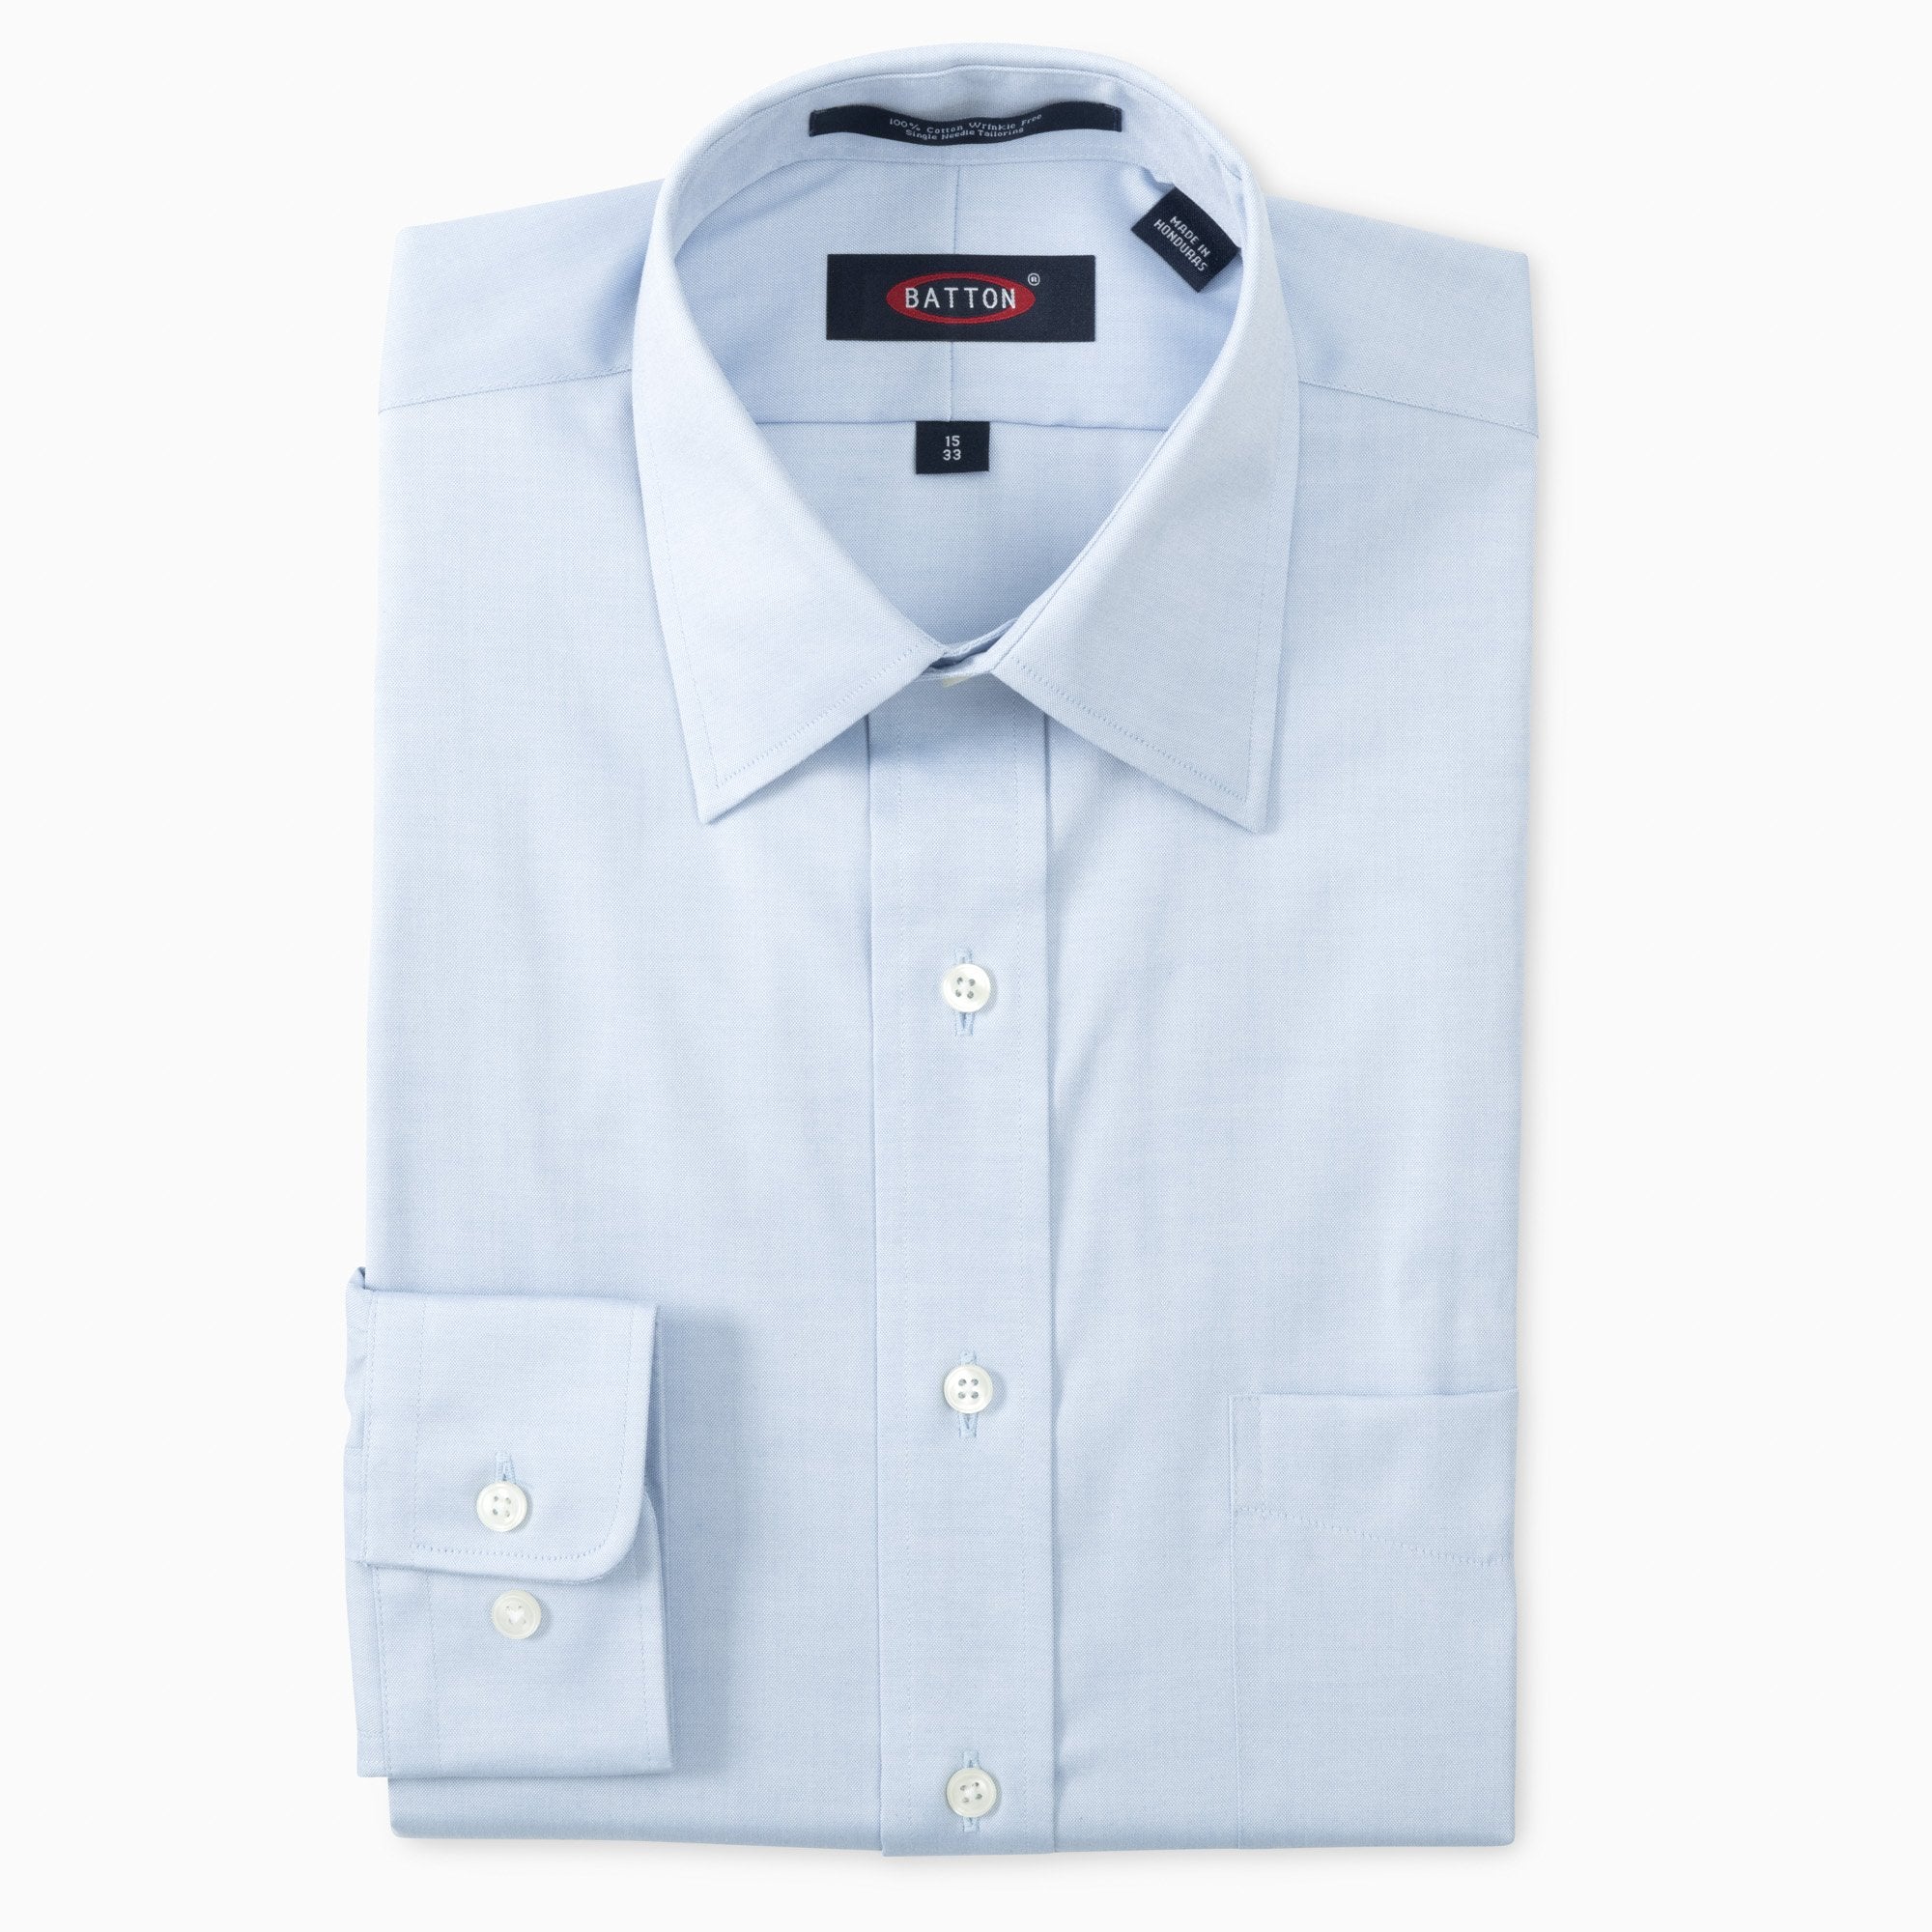 'Matt' Beyond Non-Iron® Pinpoint Cotton Dress Shirt with Spread Collar in Blue by Batton